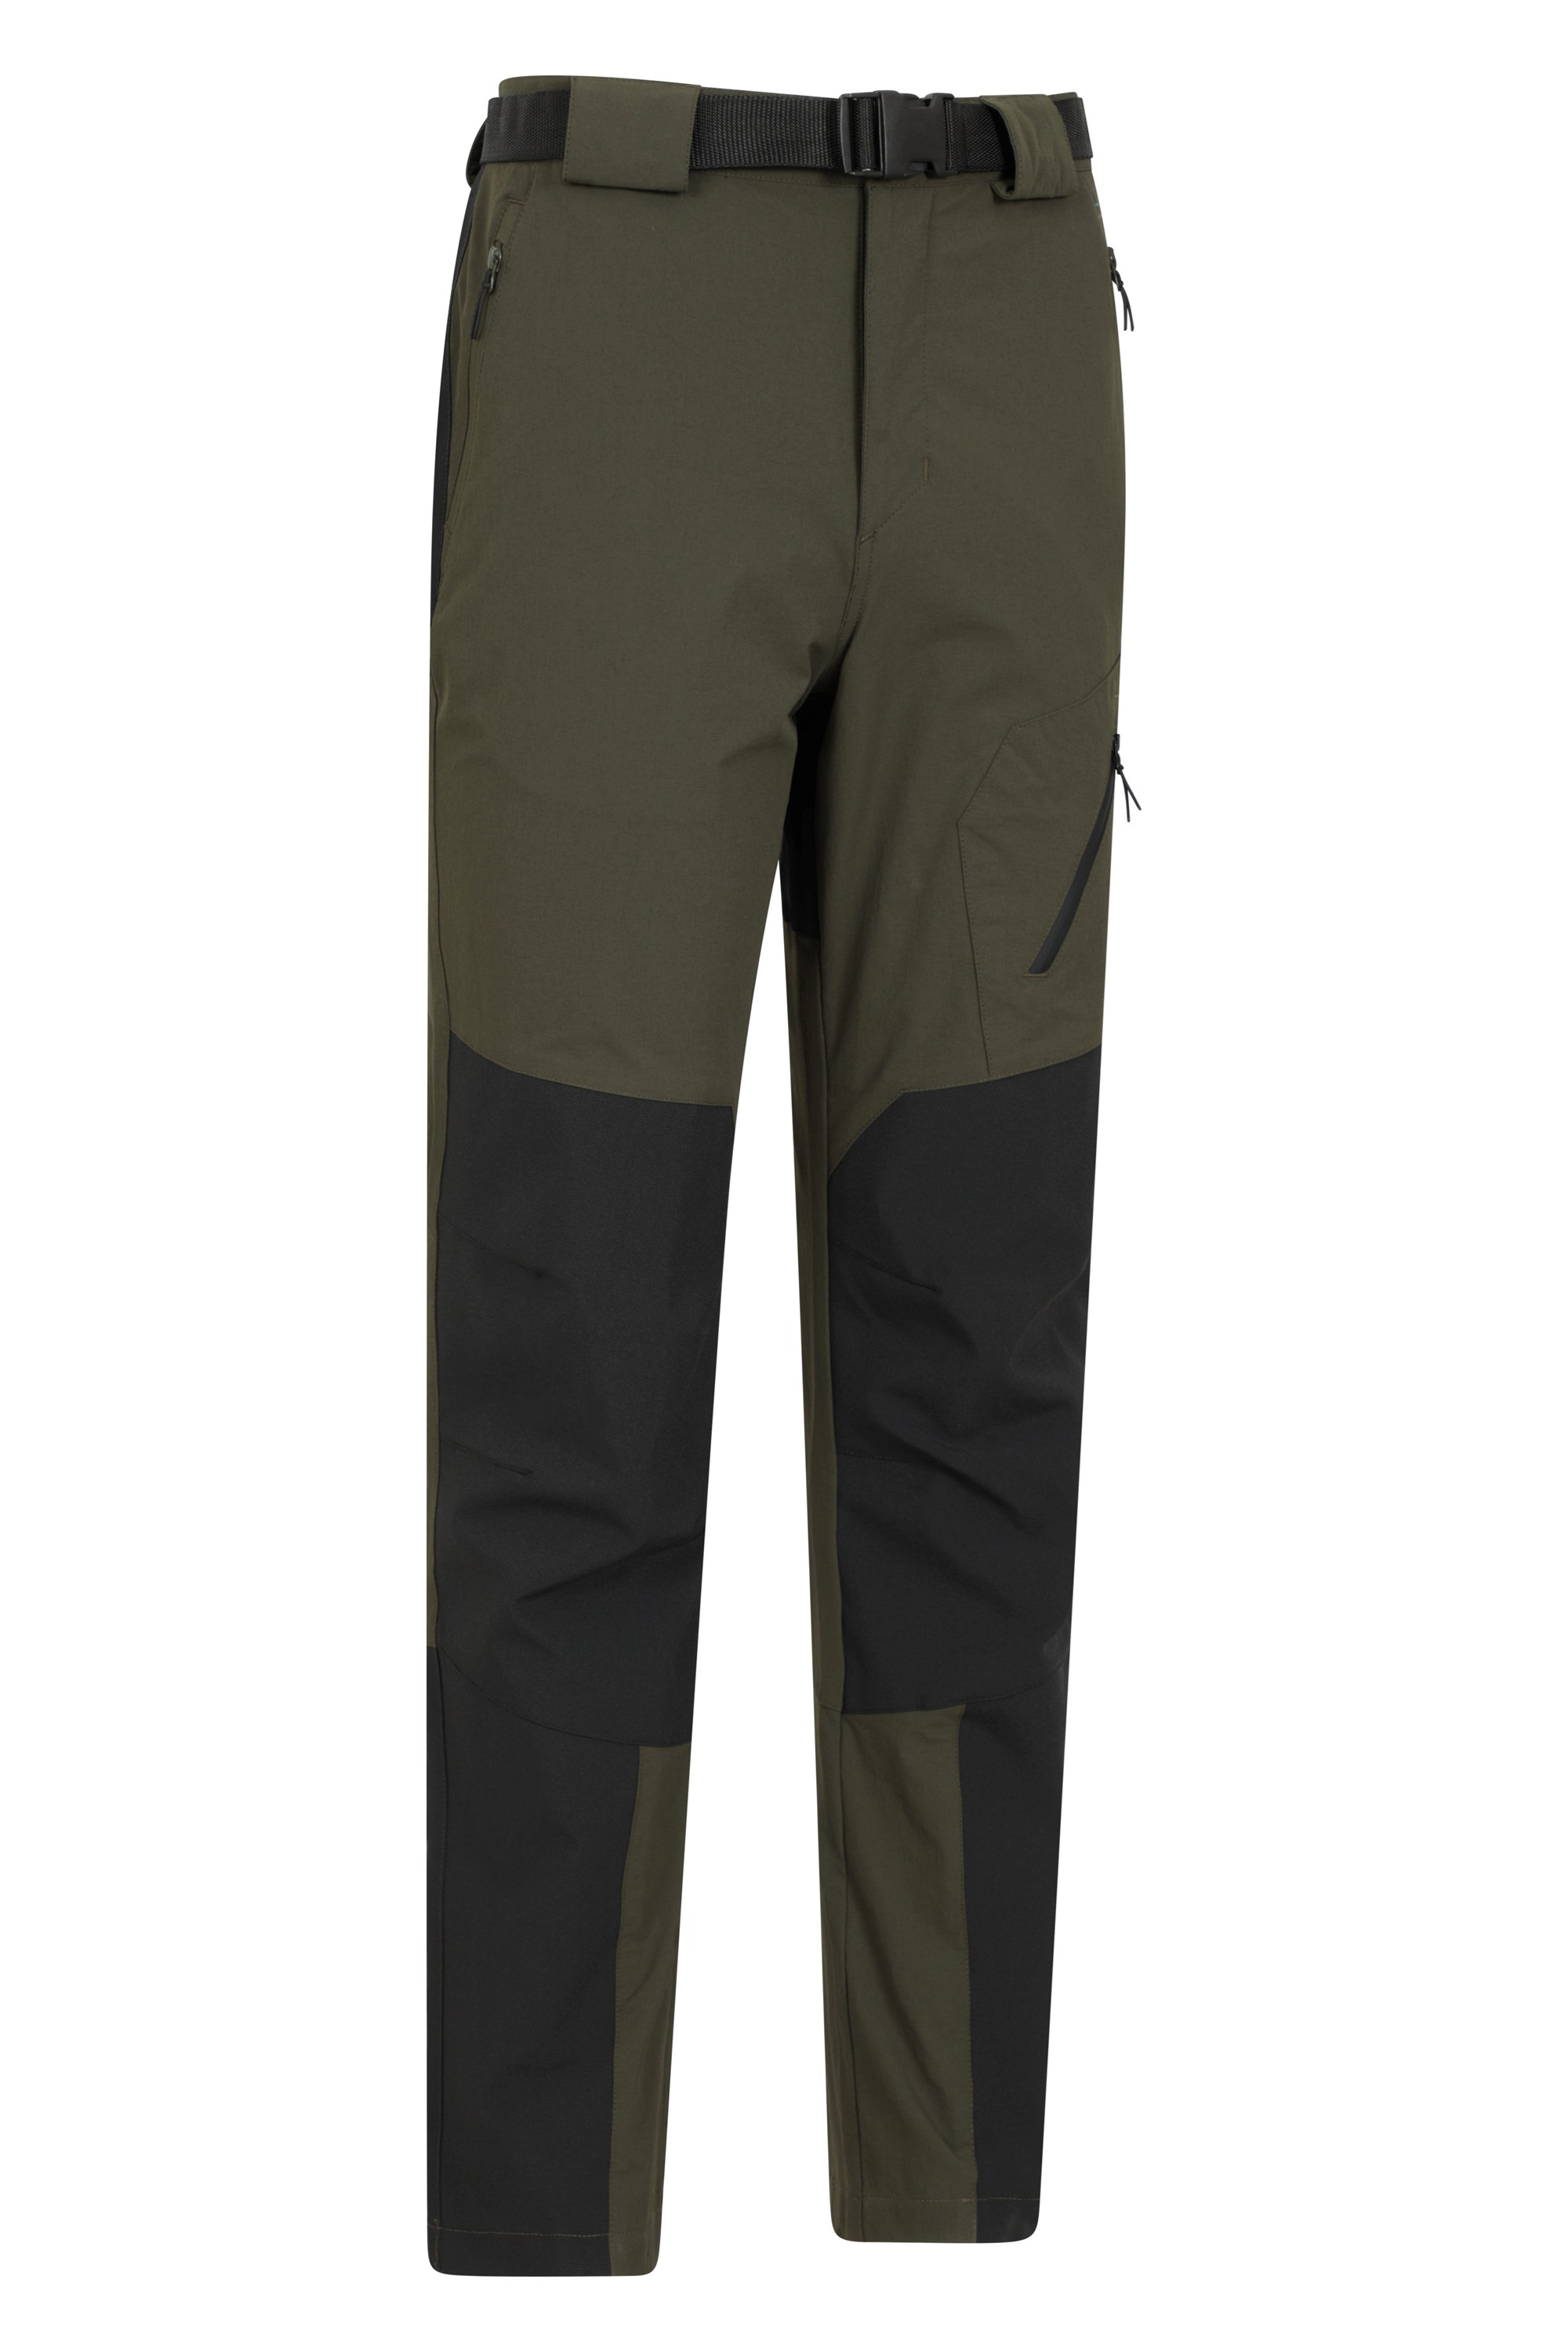 Mountain Warehouse Trek Mens Zip Off Pants - Black | Size W28